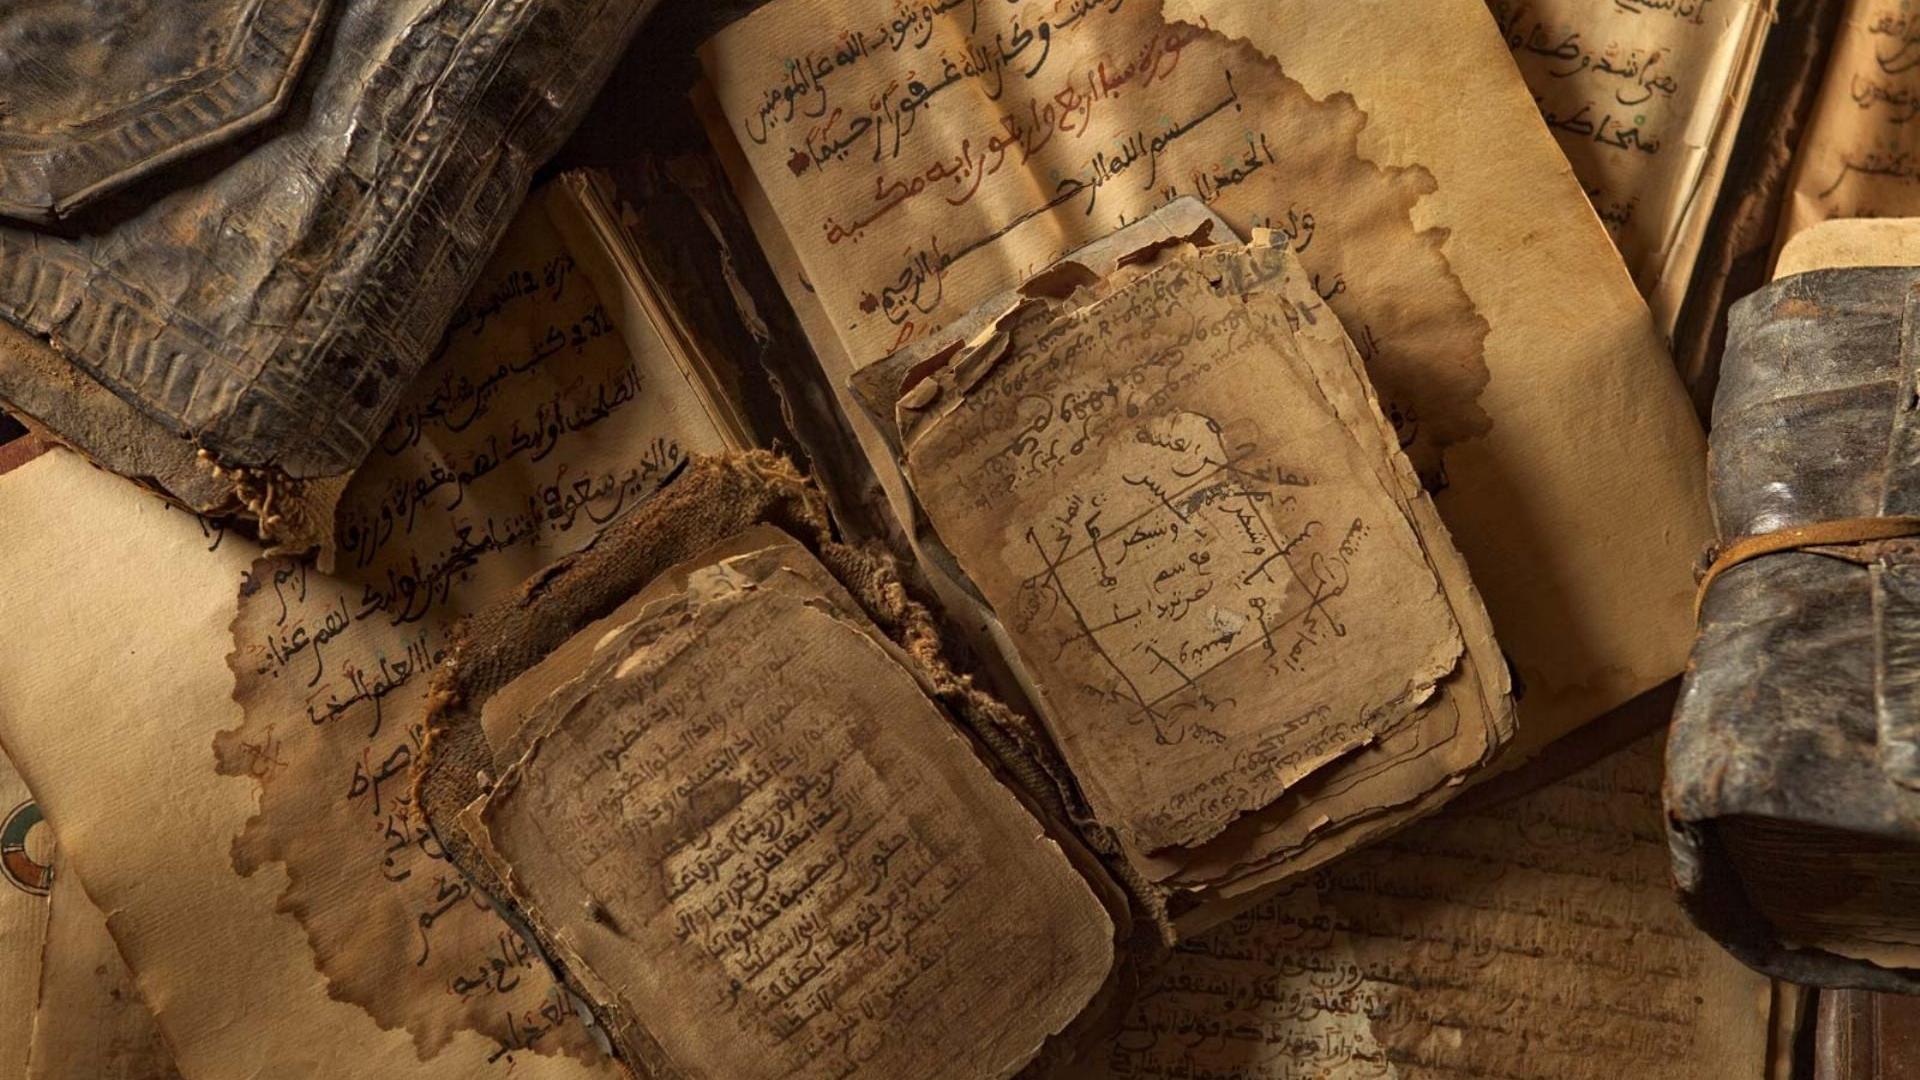 Paper text books national geographic ancient arabic manuscript